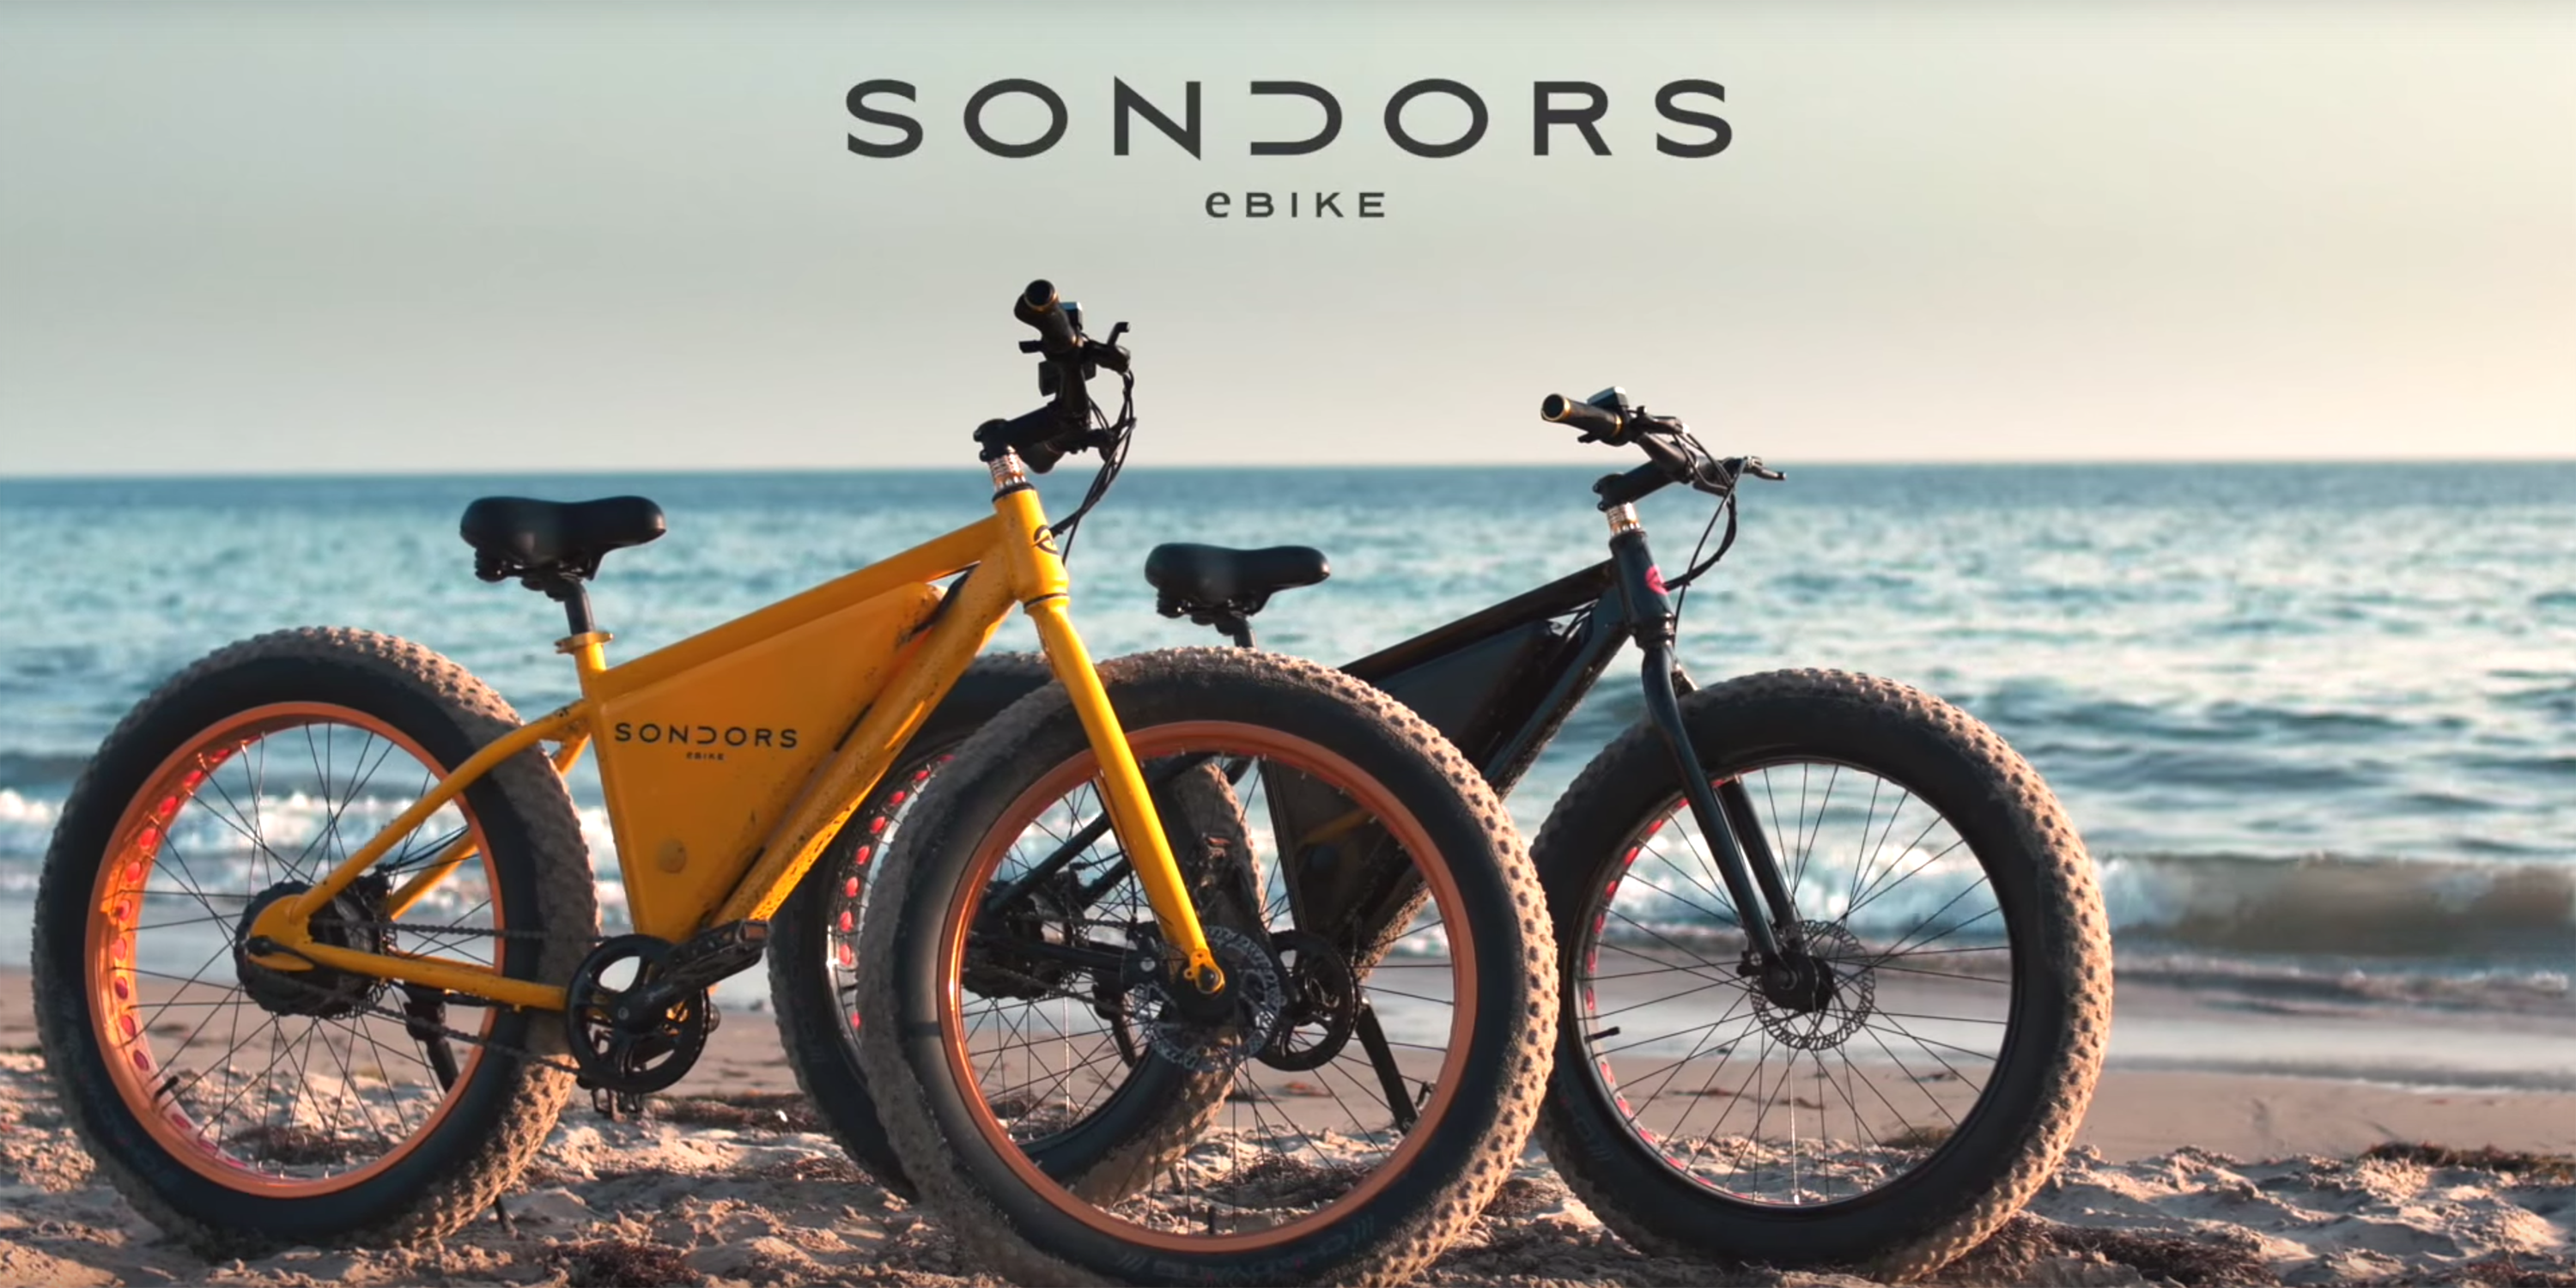 sondors electric bike review 2019